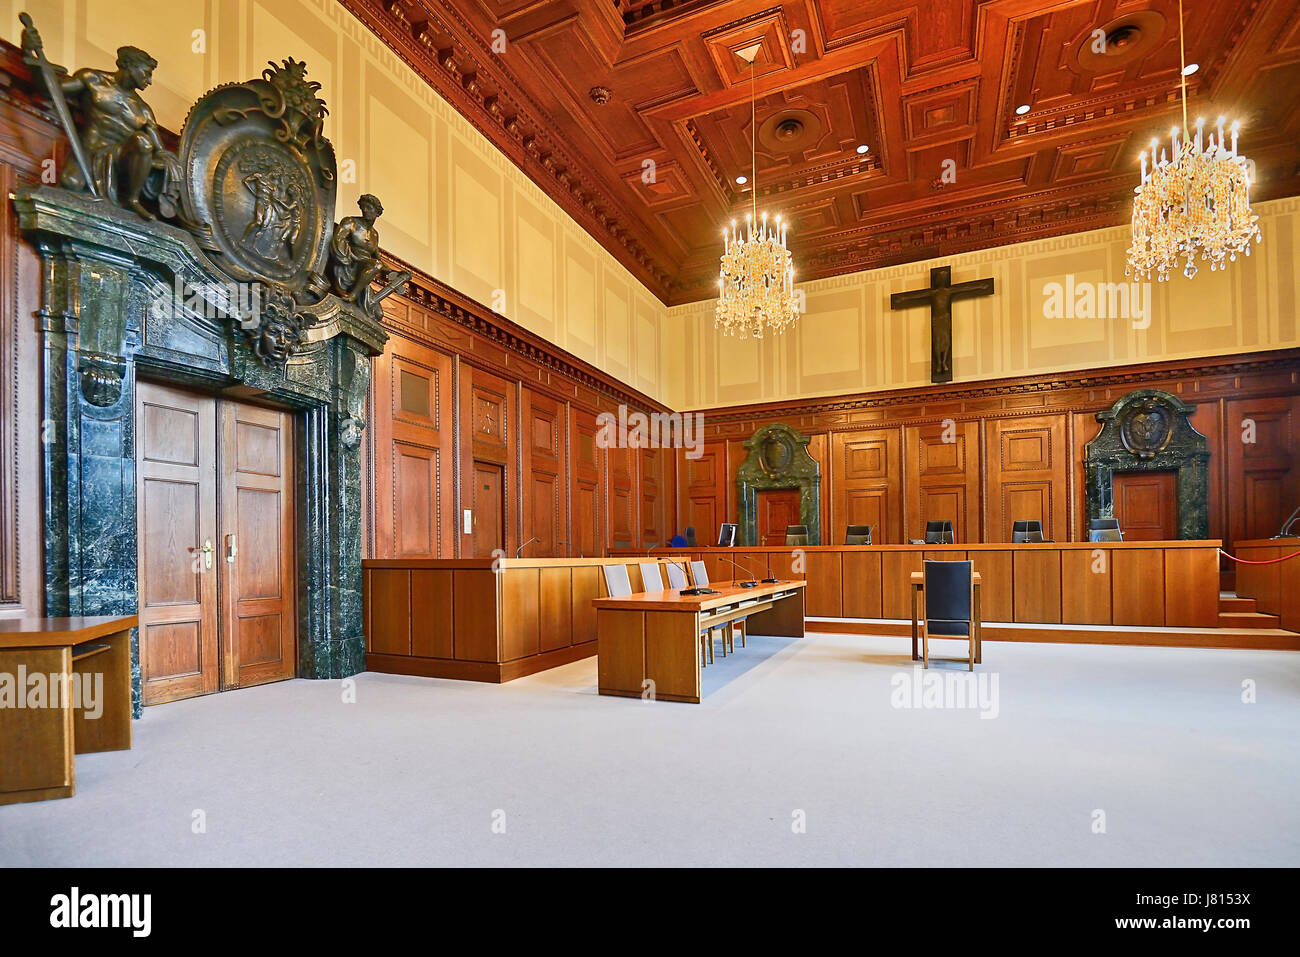 Germany, Bavaria, Nuremberg, Nuremberg Palace of Justice, Memorium Nuremberg Trials Museum, Courtroom 600. Stock Photo